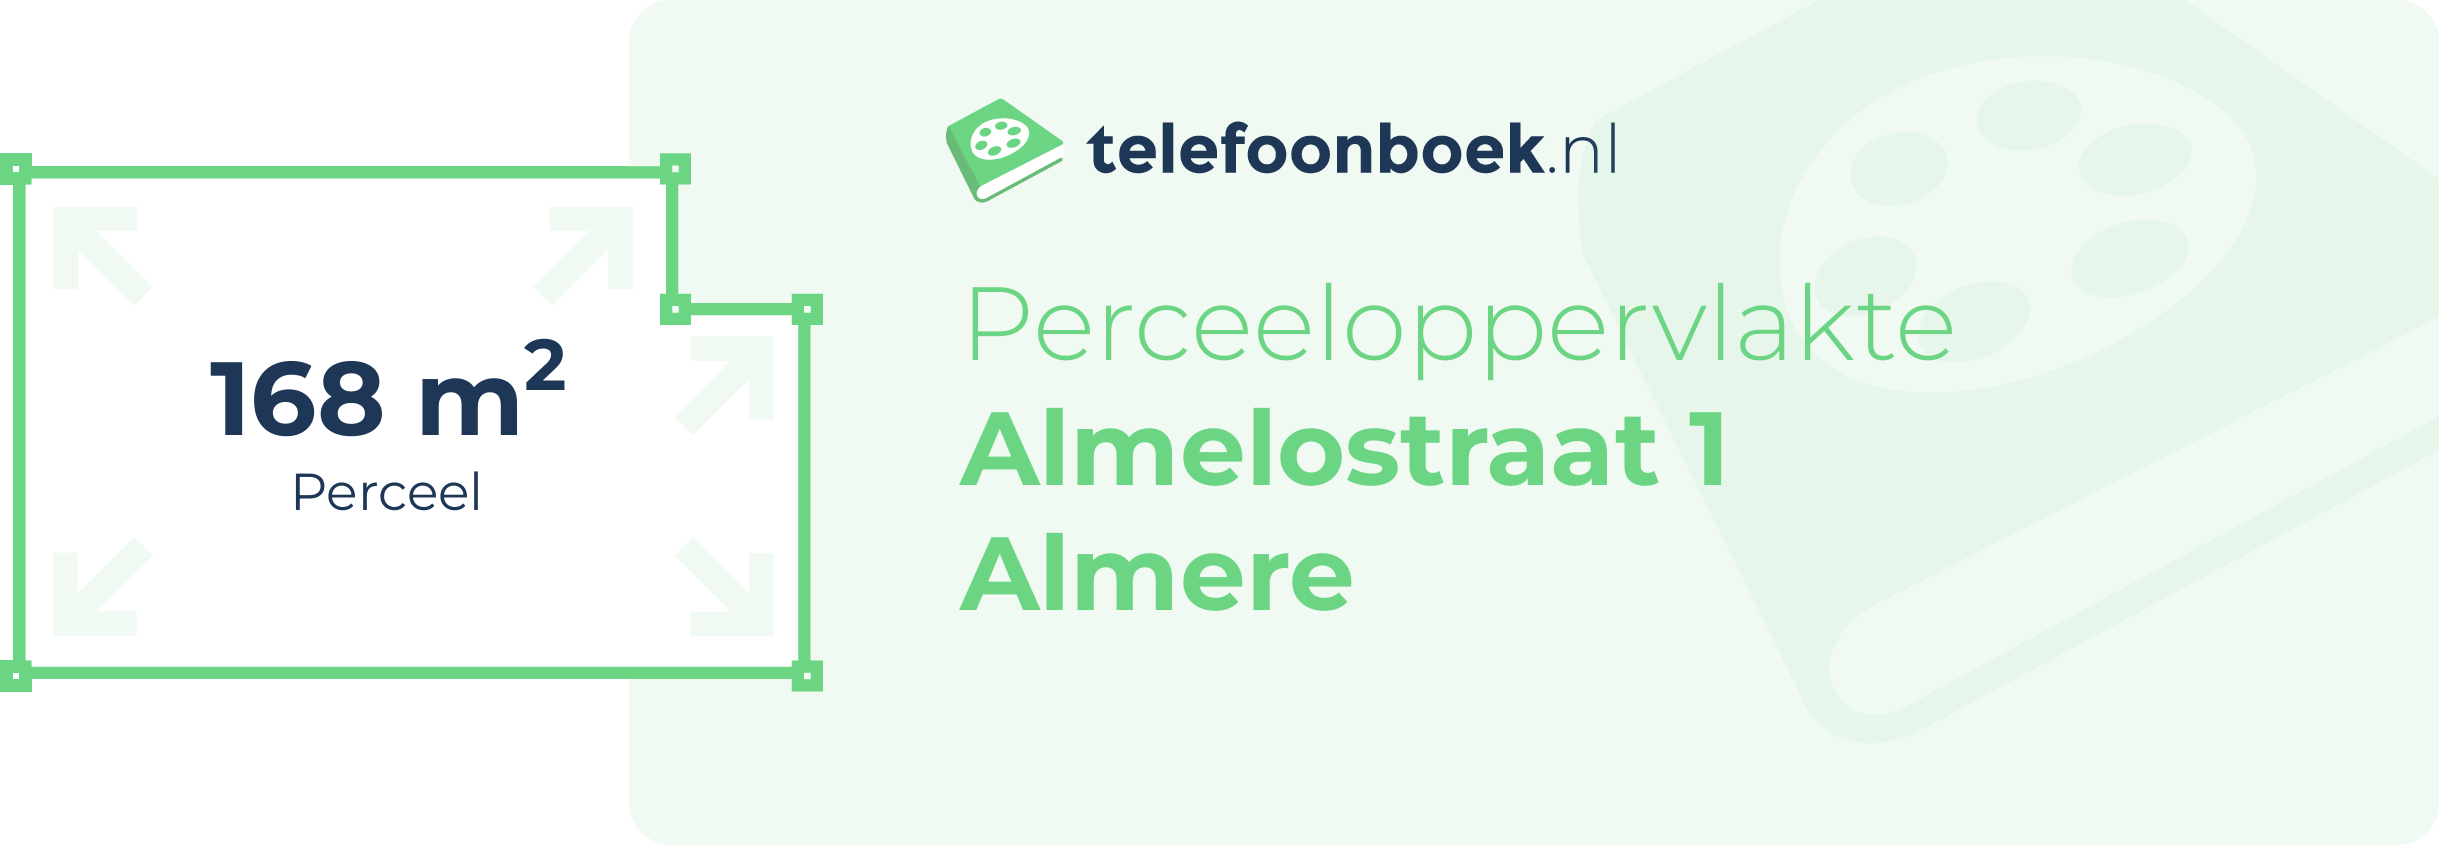 Perceeloppervlakte Almelostraat 1 Almere